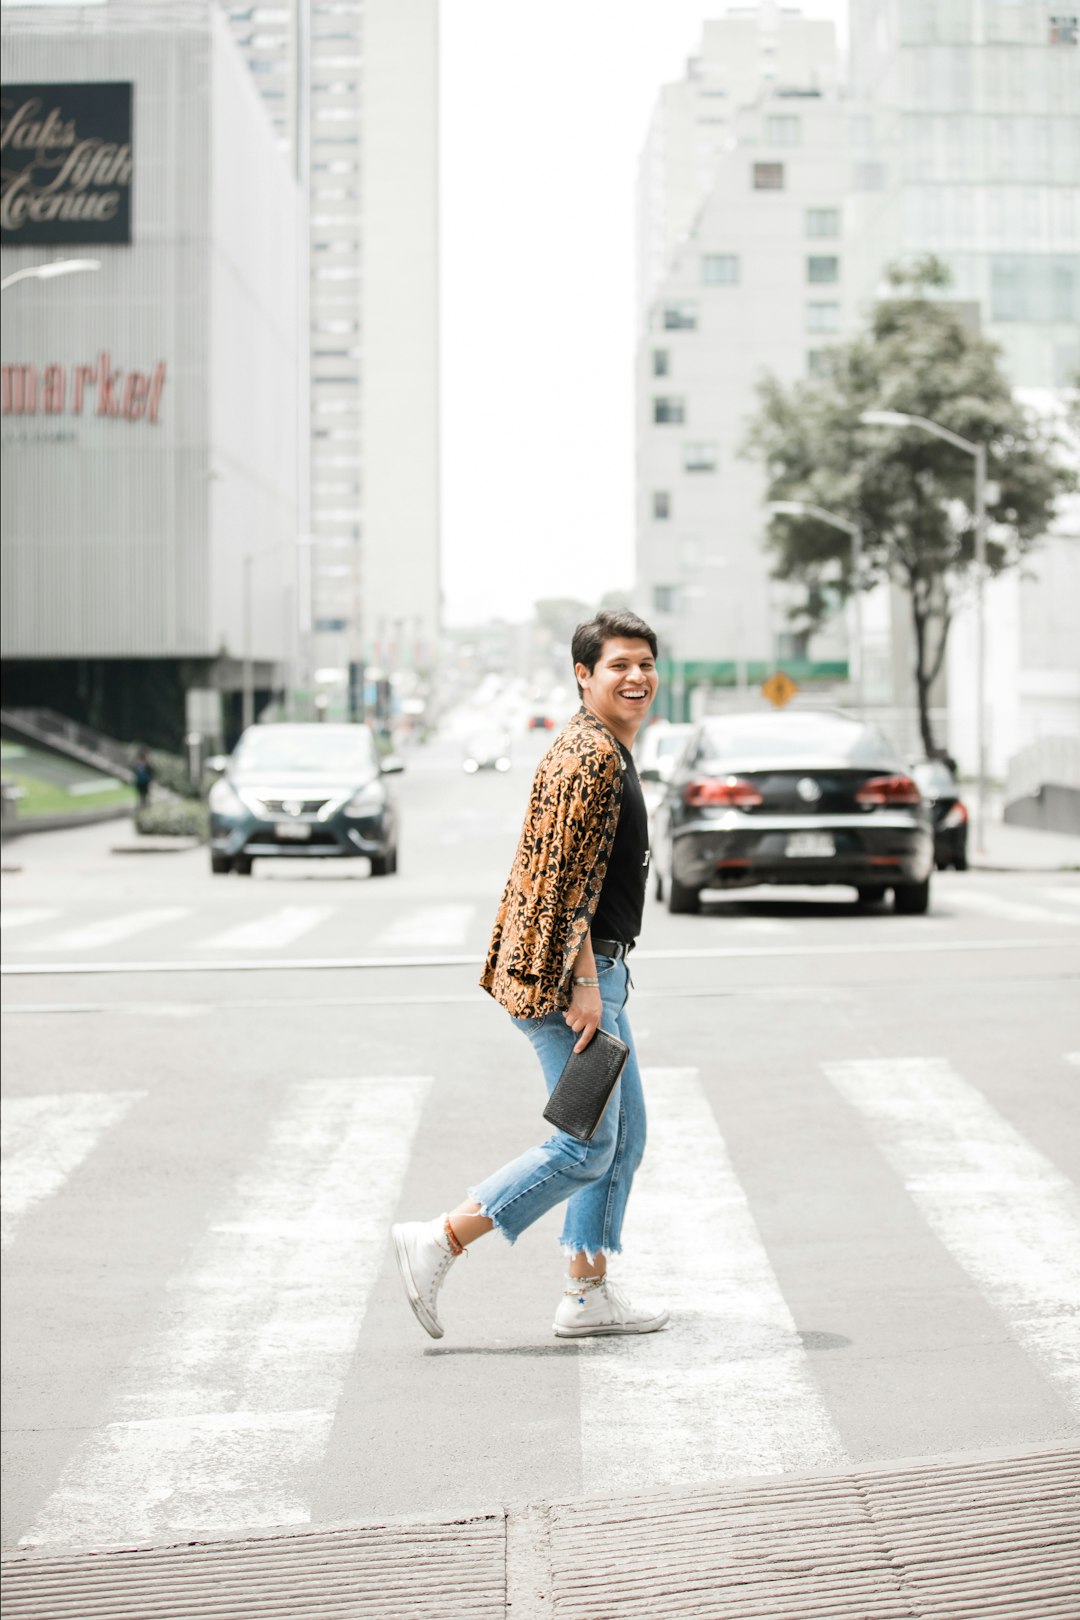 person wearing brown jacket walking on street